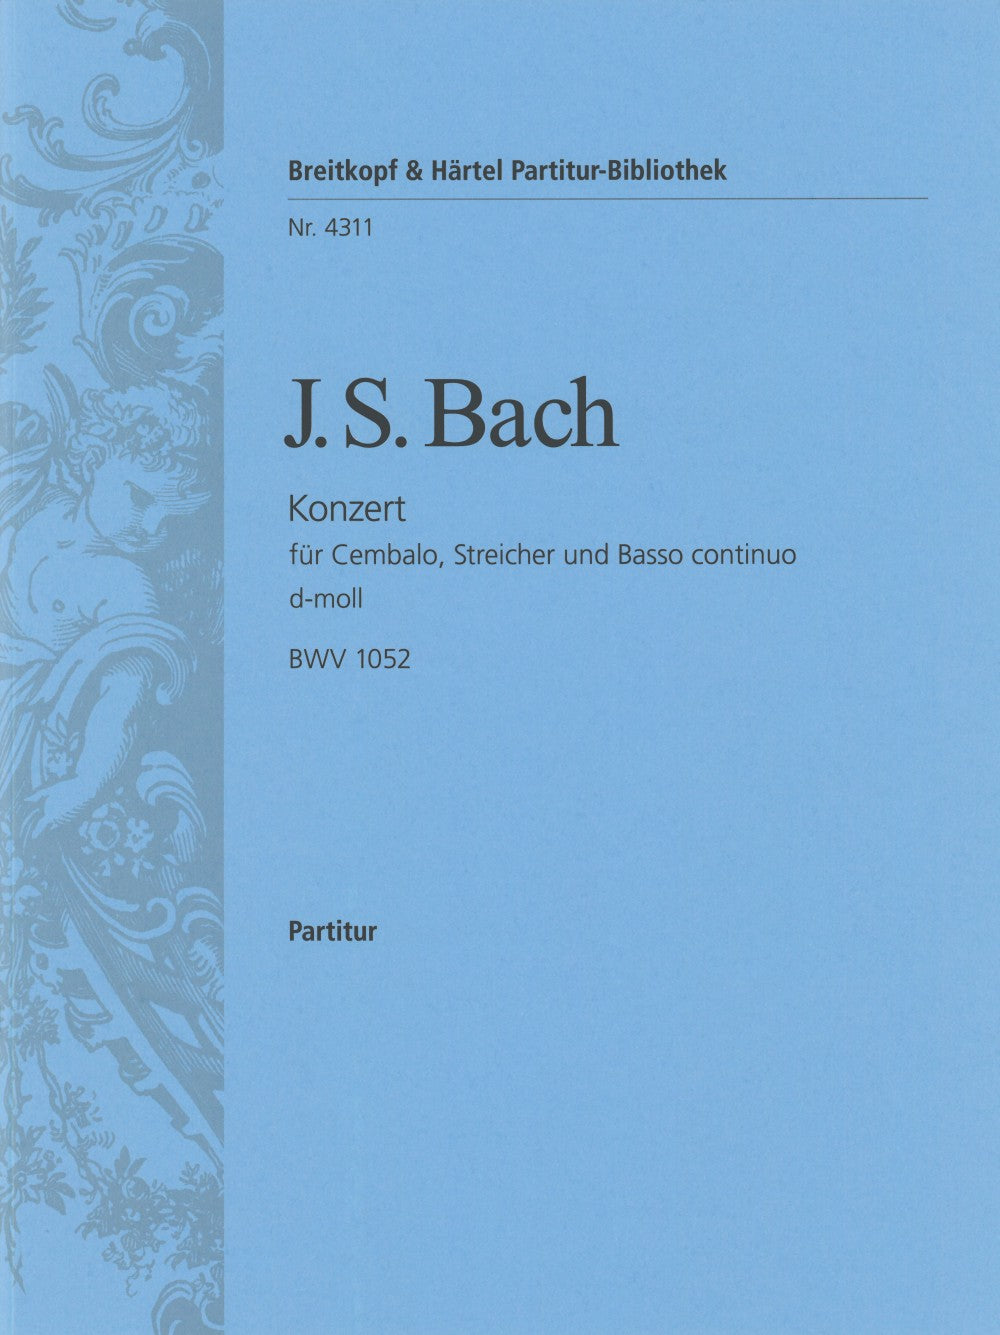 Bach: Harpsichord Concerto No. 1in in D Minor, BWV 1052